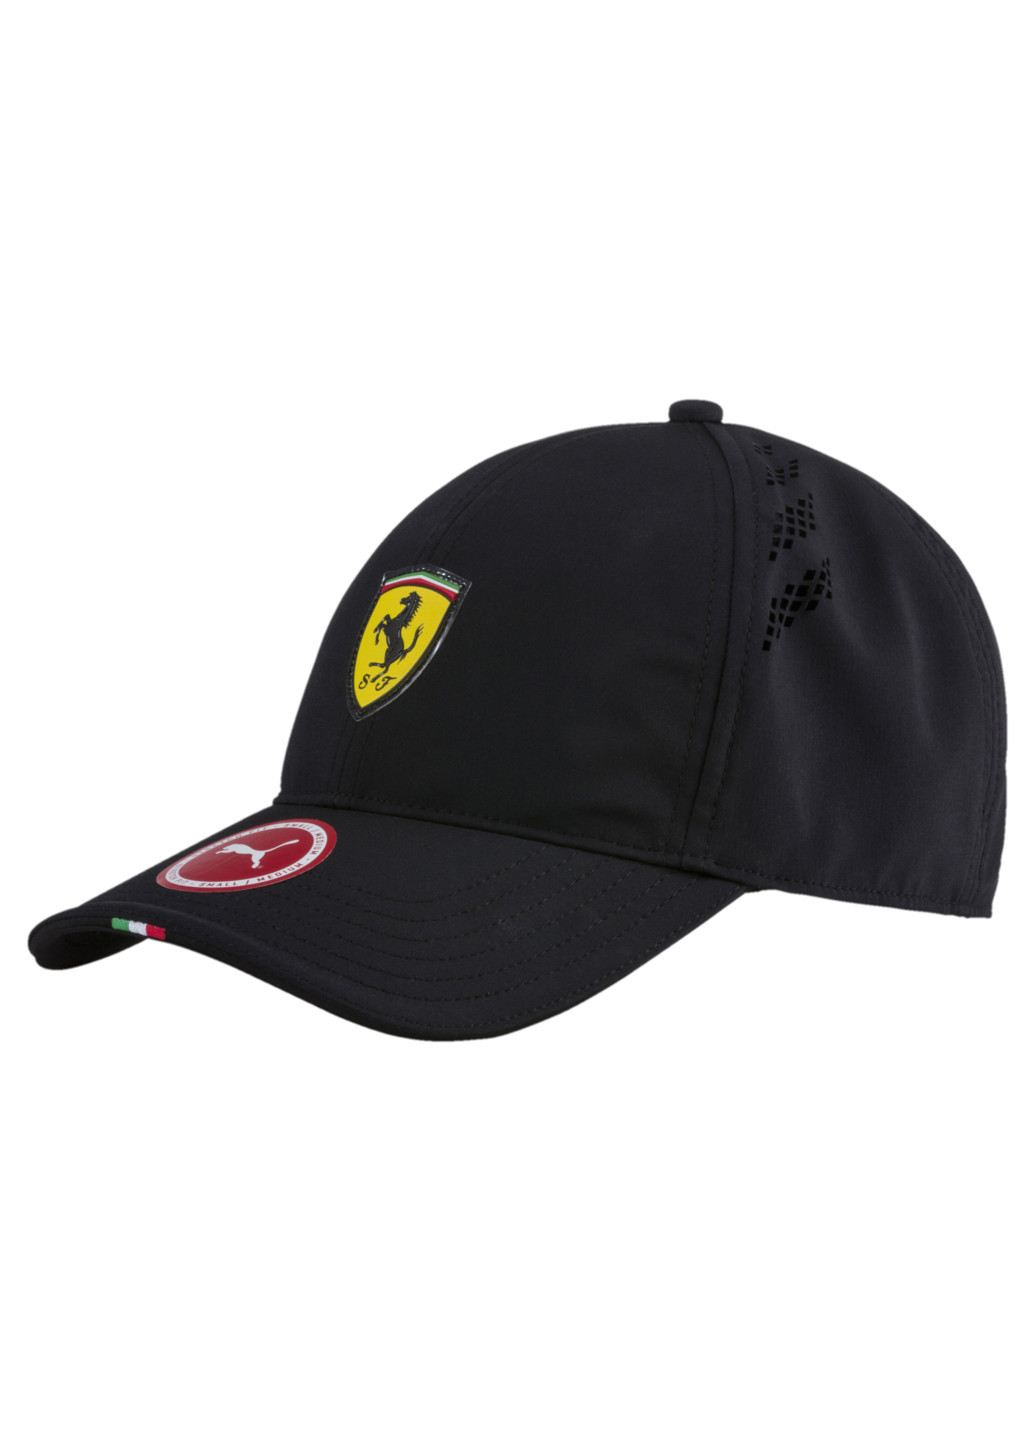 Кепка Ferrari Fanwear force SF cap Puma однотонная чёрная спортивная